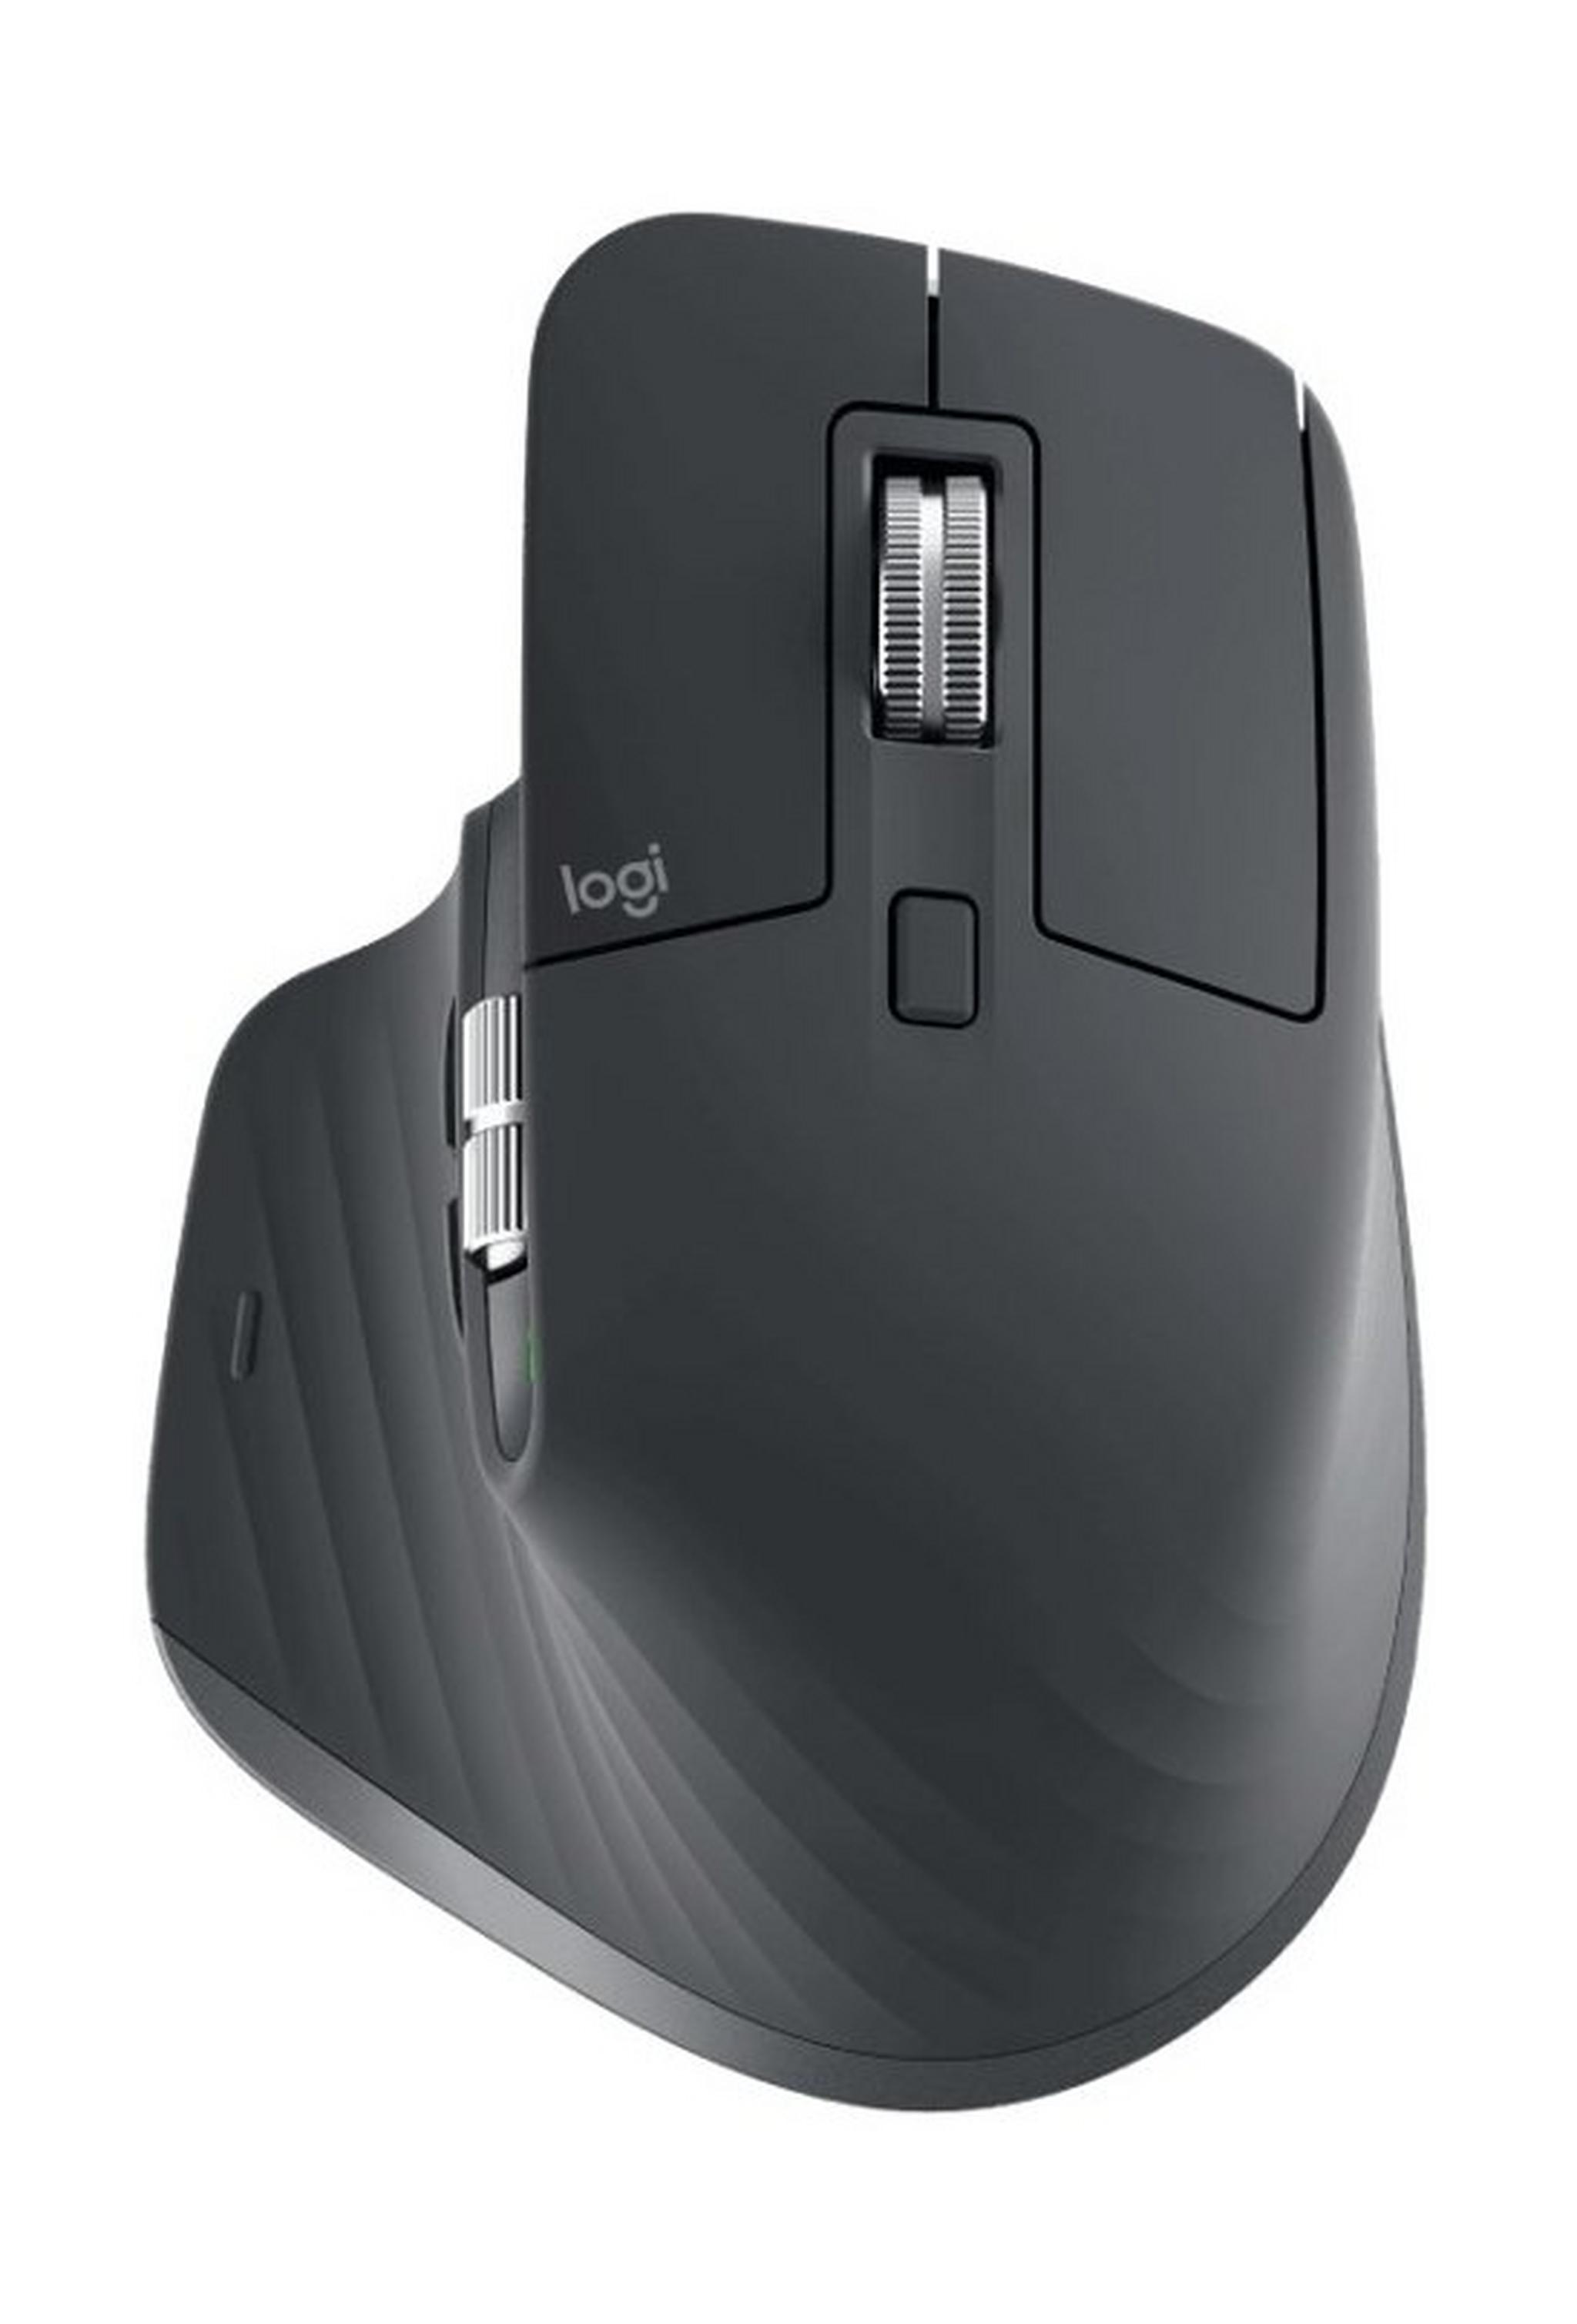 Logitech MX Master 3 Advanced Wireless Mouse (910-005694)